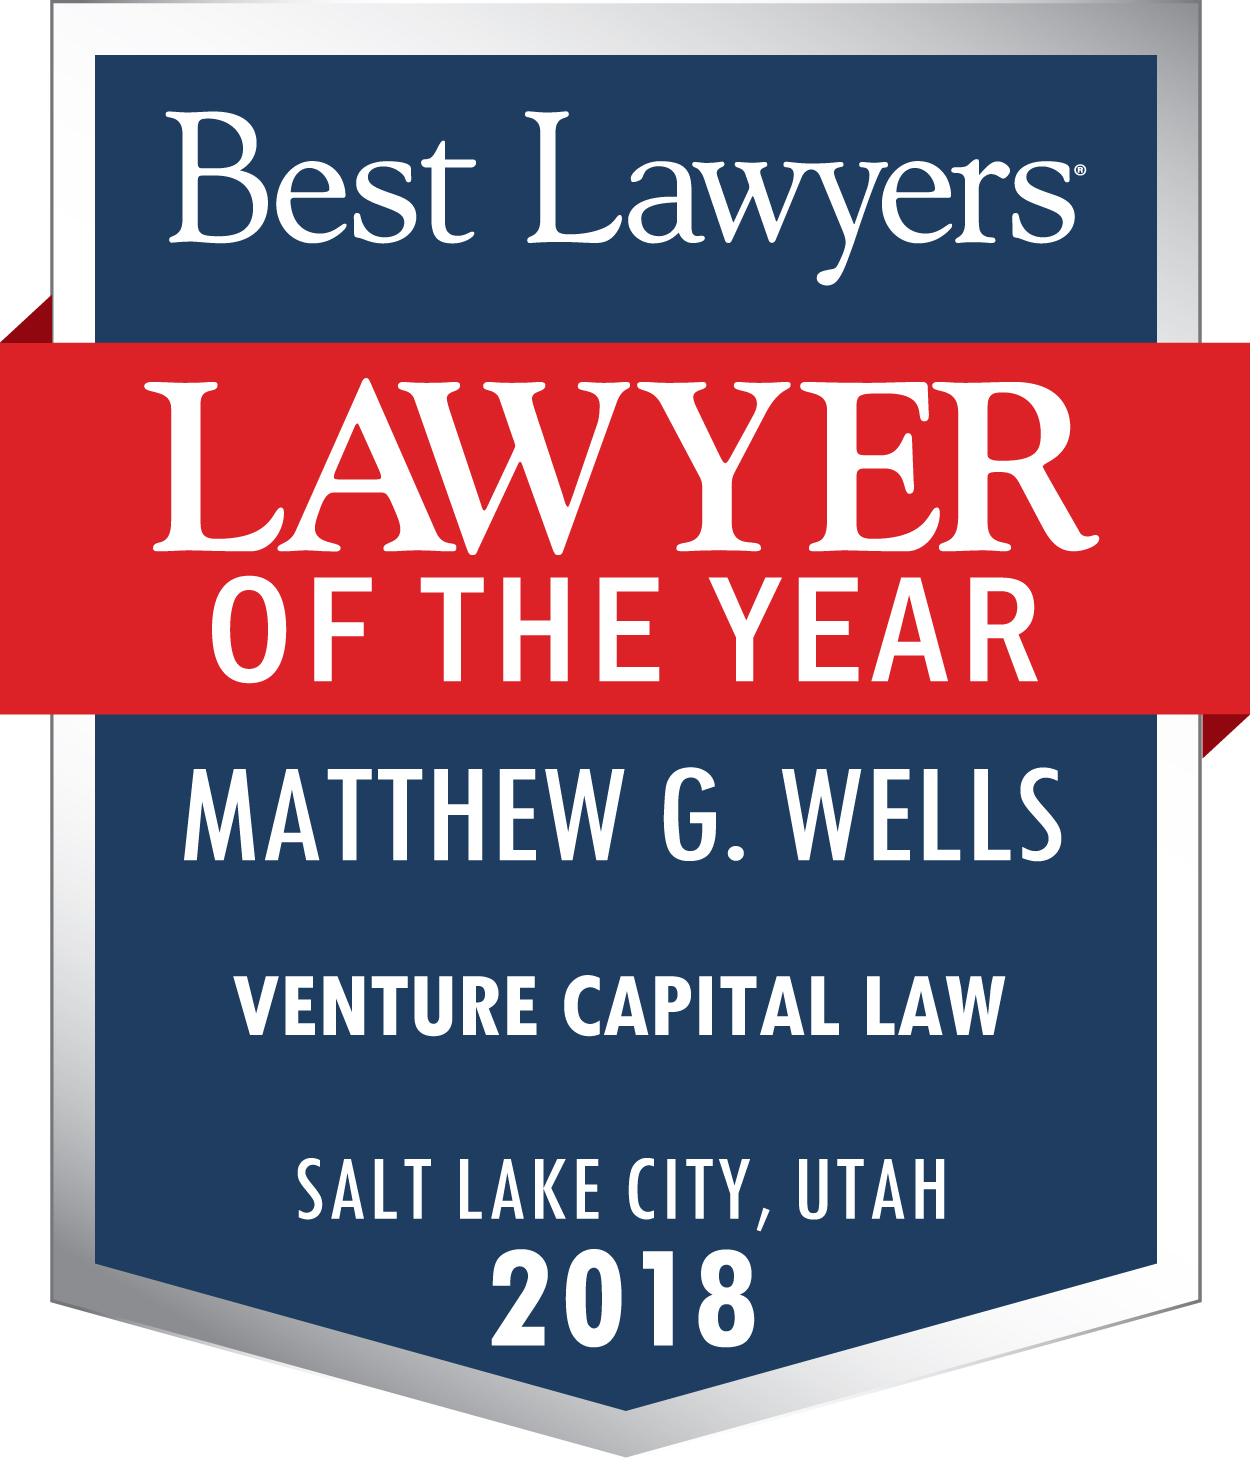 Best Lawyers Lawyer of the Year Matt Wells 2018